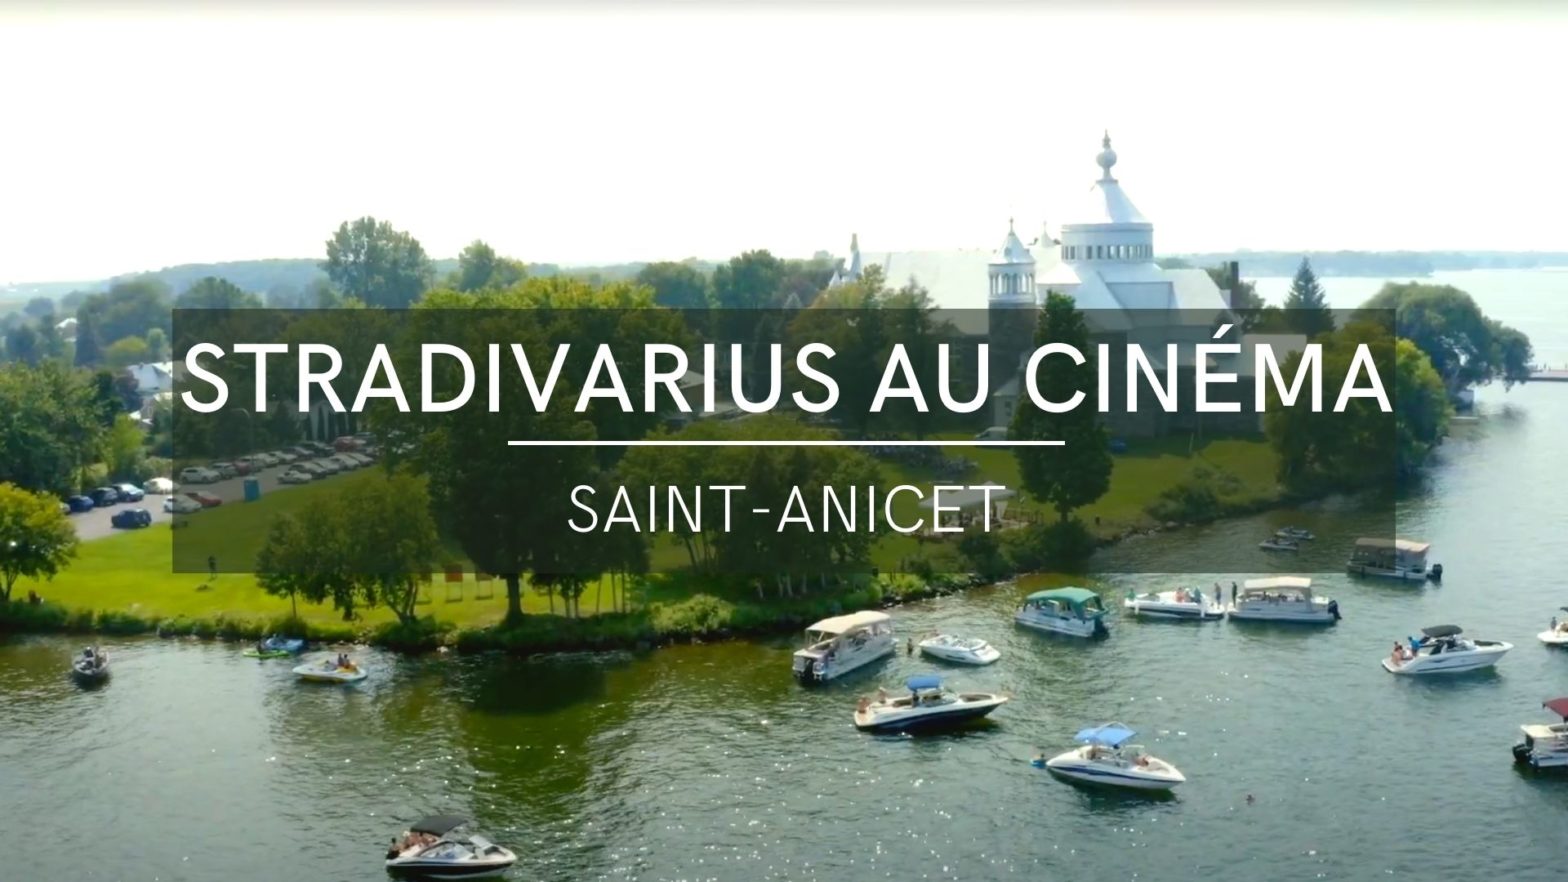 STRADIVARIUS AU CINÉMA 28 août 2022 Saint-Anicet.jpg